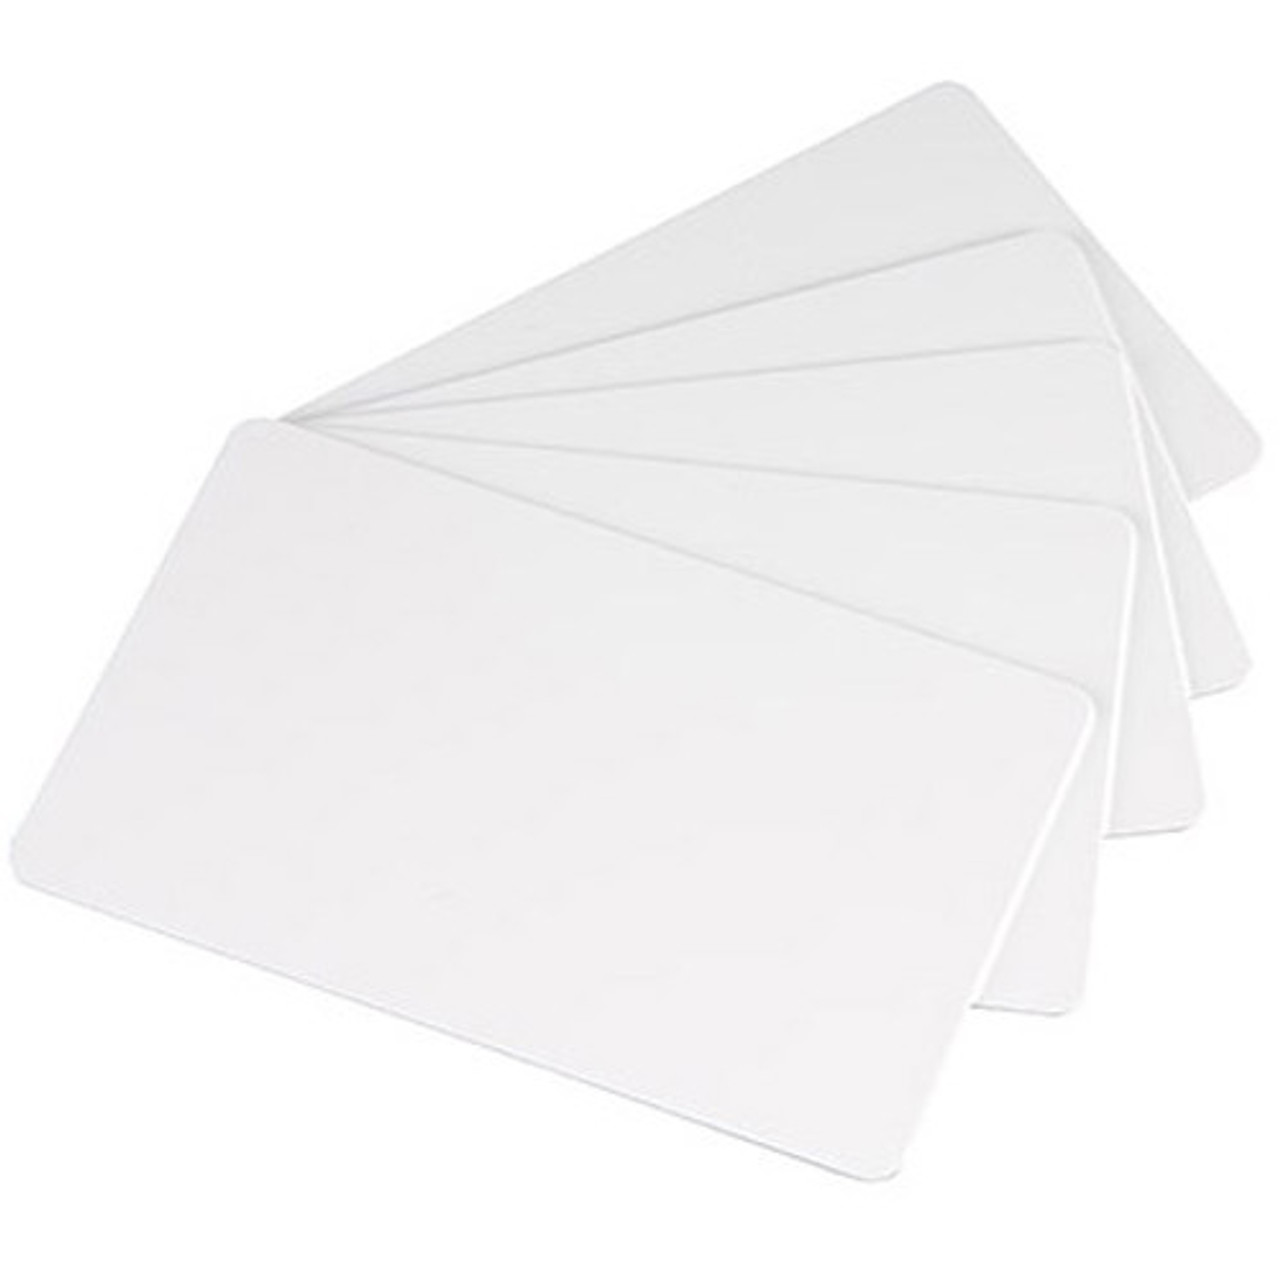 Evolis PVC Blank Rewritable Cards (Blue) - 30Ml - Qty. 100 - C5101